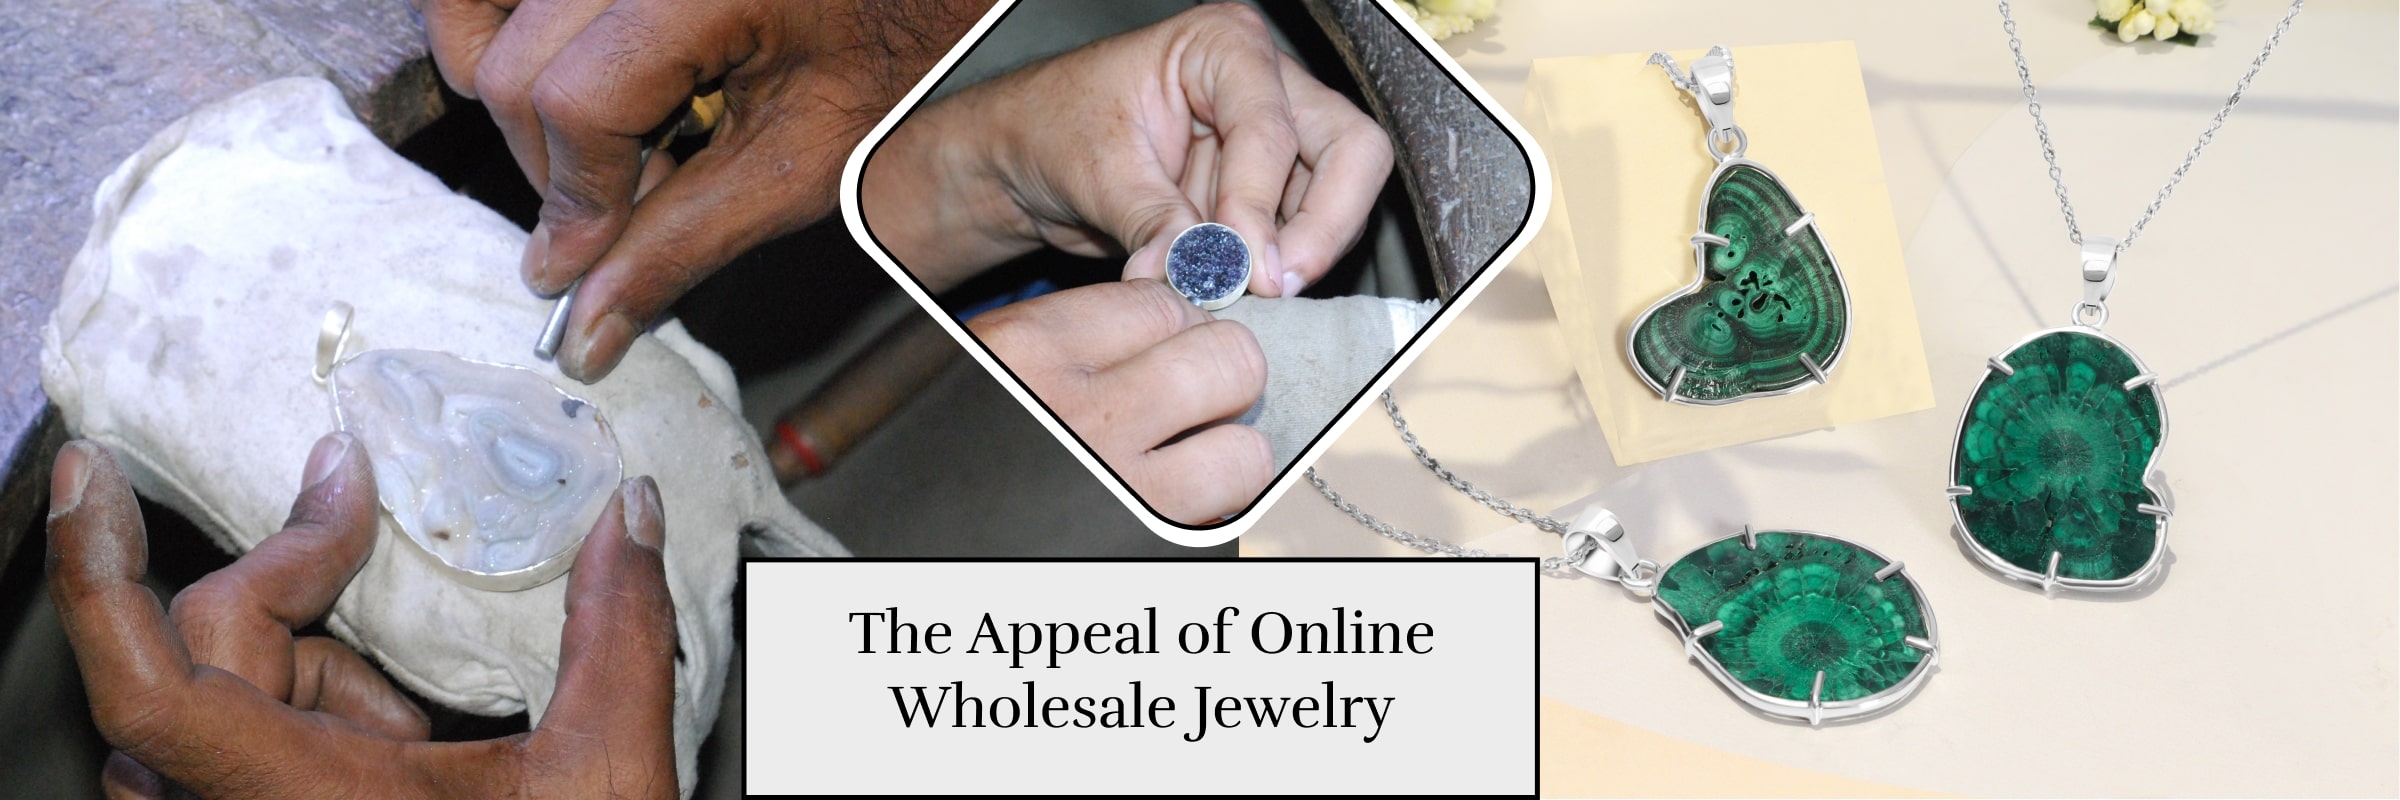 Online Wholesale Jewelry Platform